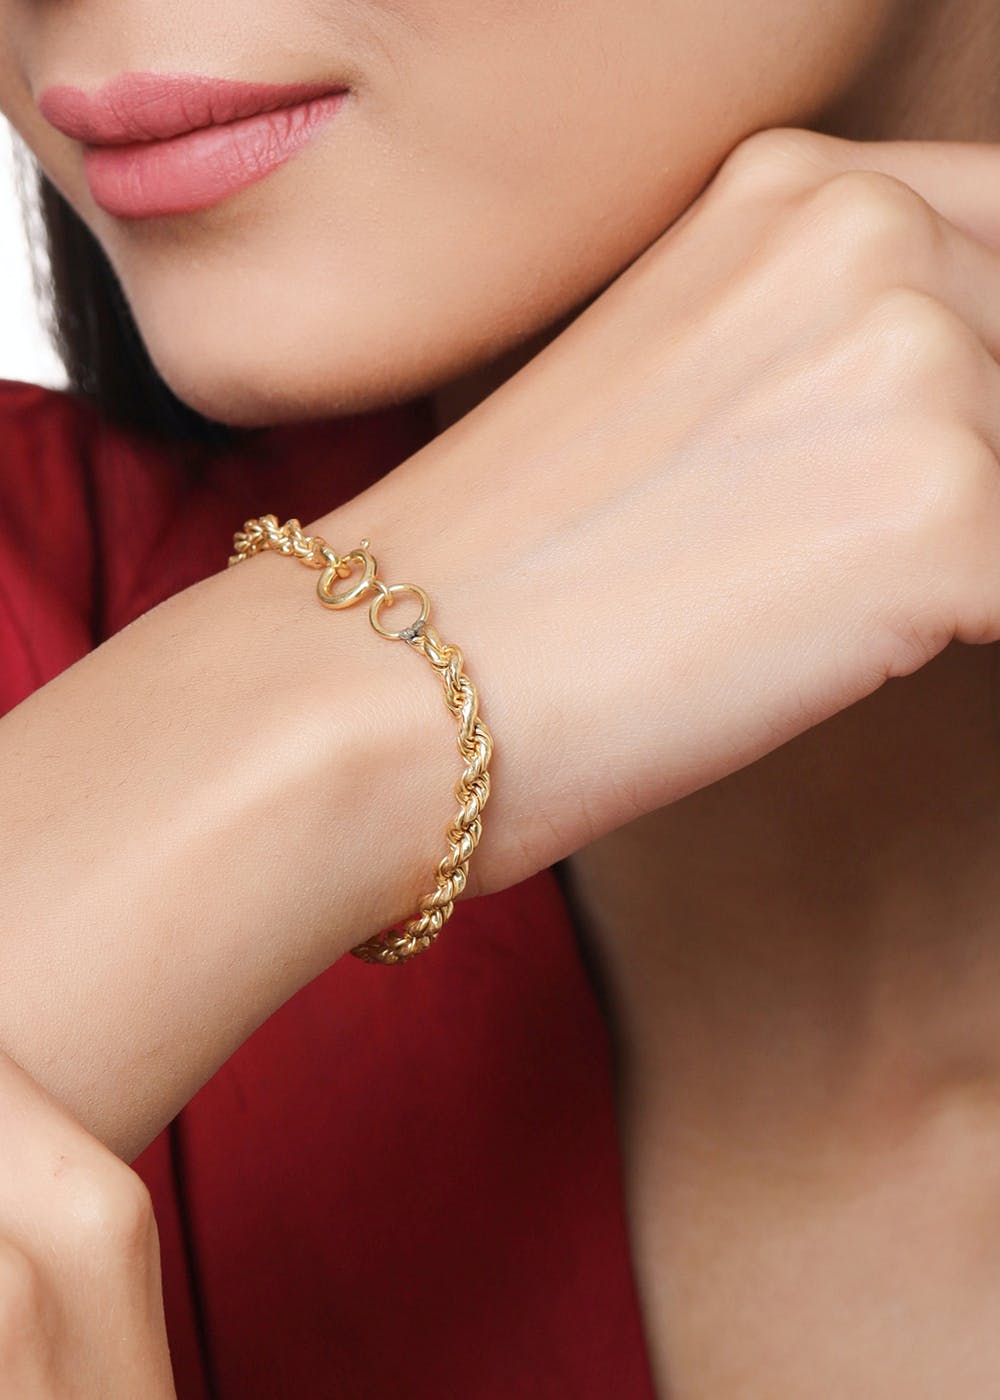 Latest gold bracelets designs - YouTube